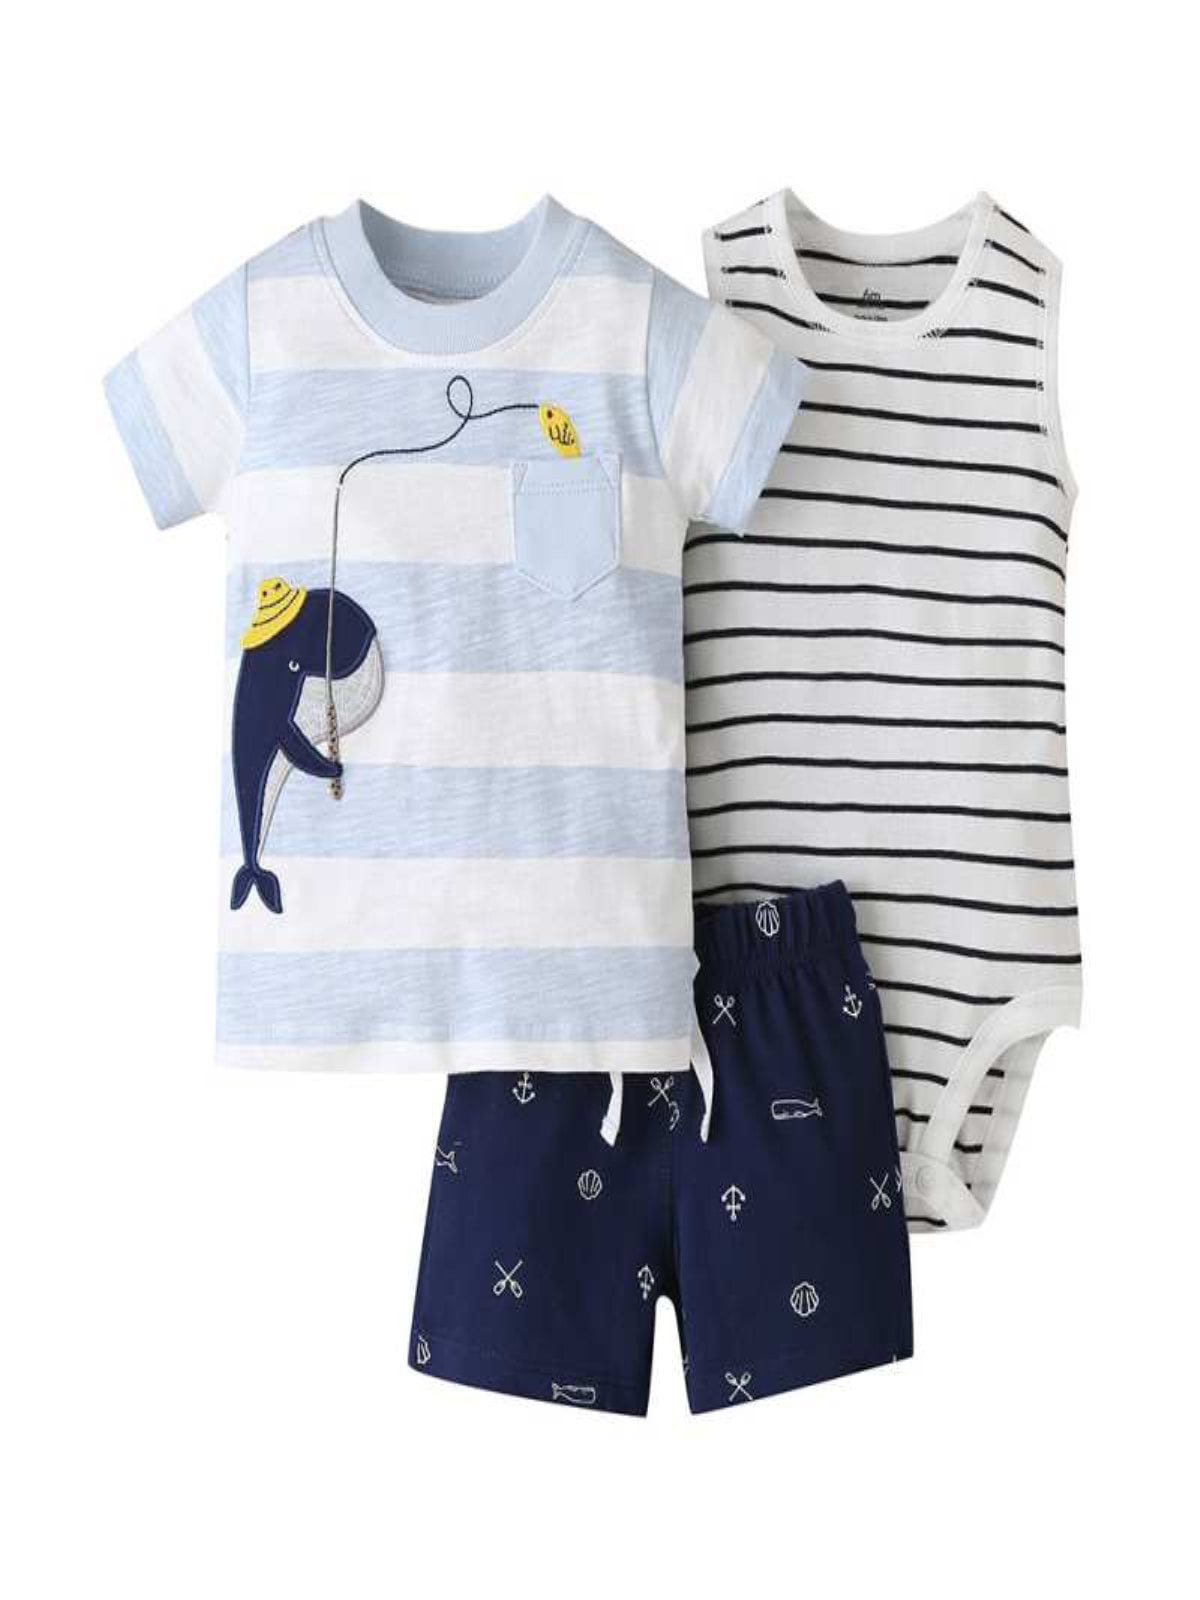 Details about   3pcs Toddler Kids Baby Boy Clothes Shirt Tops+Suspender Pants Outfits Set 